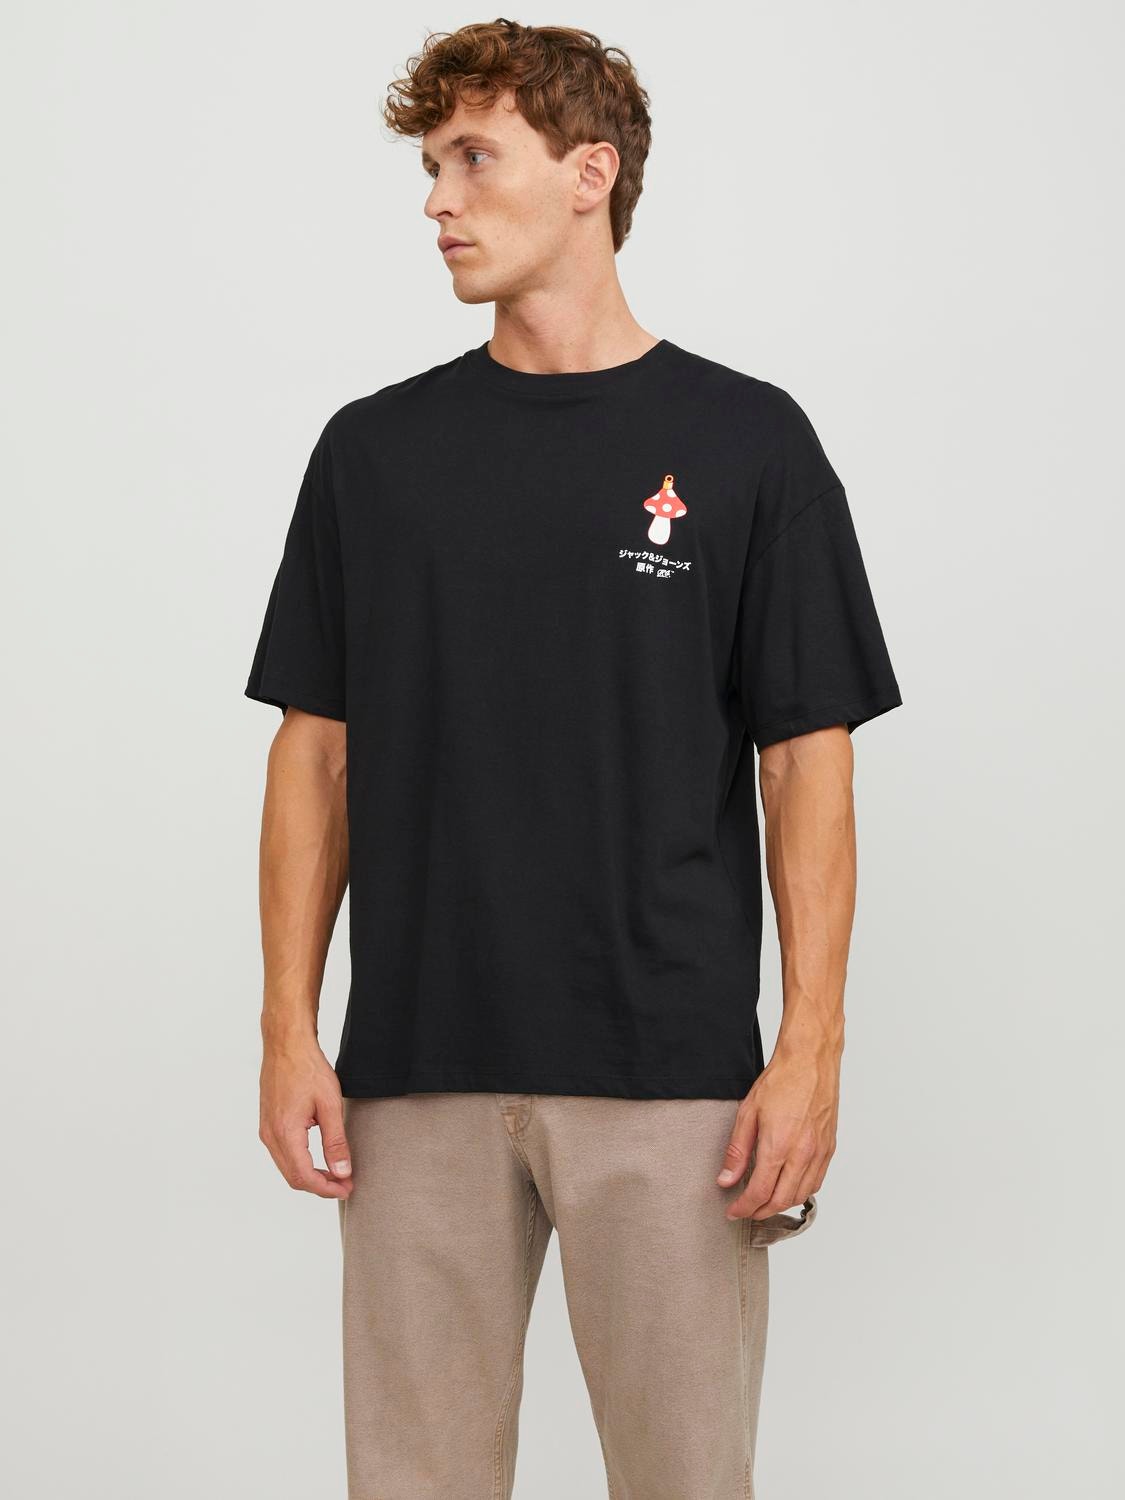 Jack & Jones X-mas Rundhals T-shirt -Black - 12247683